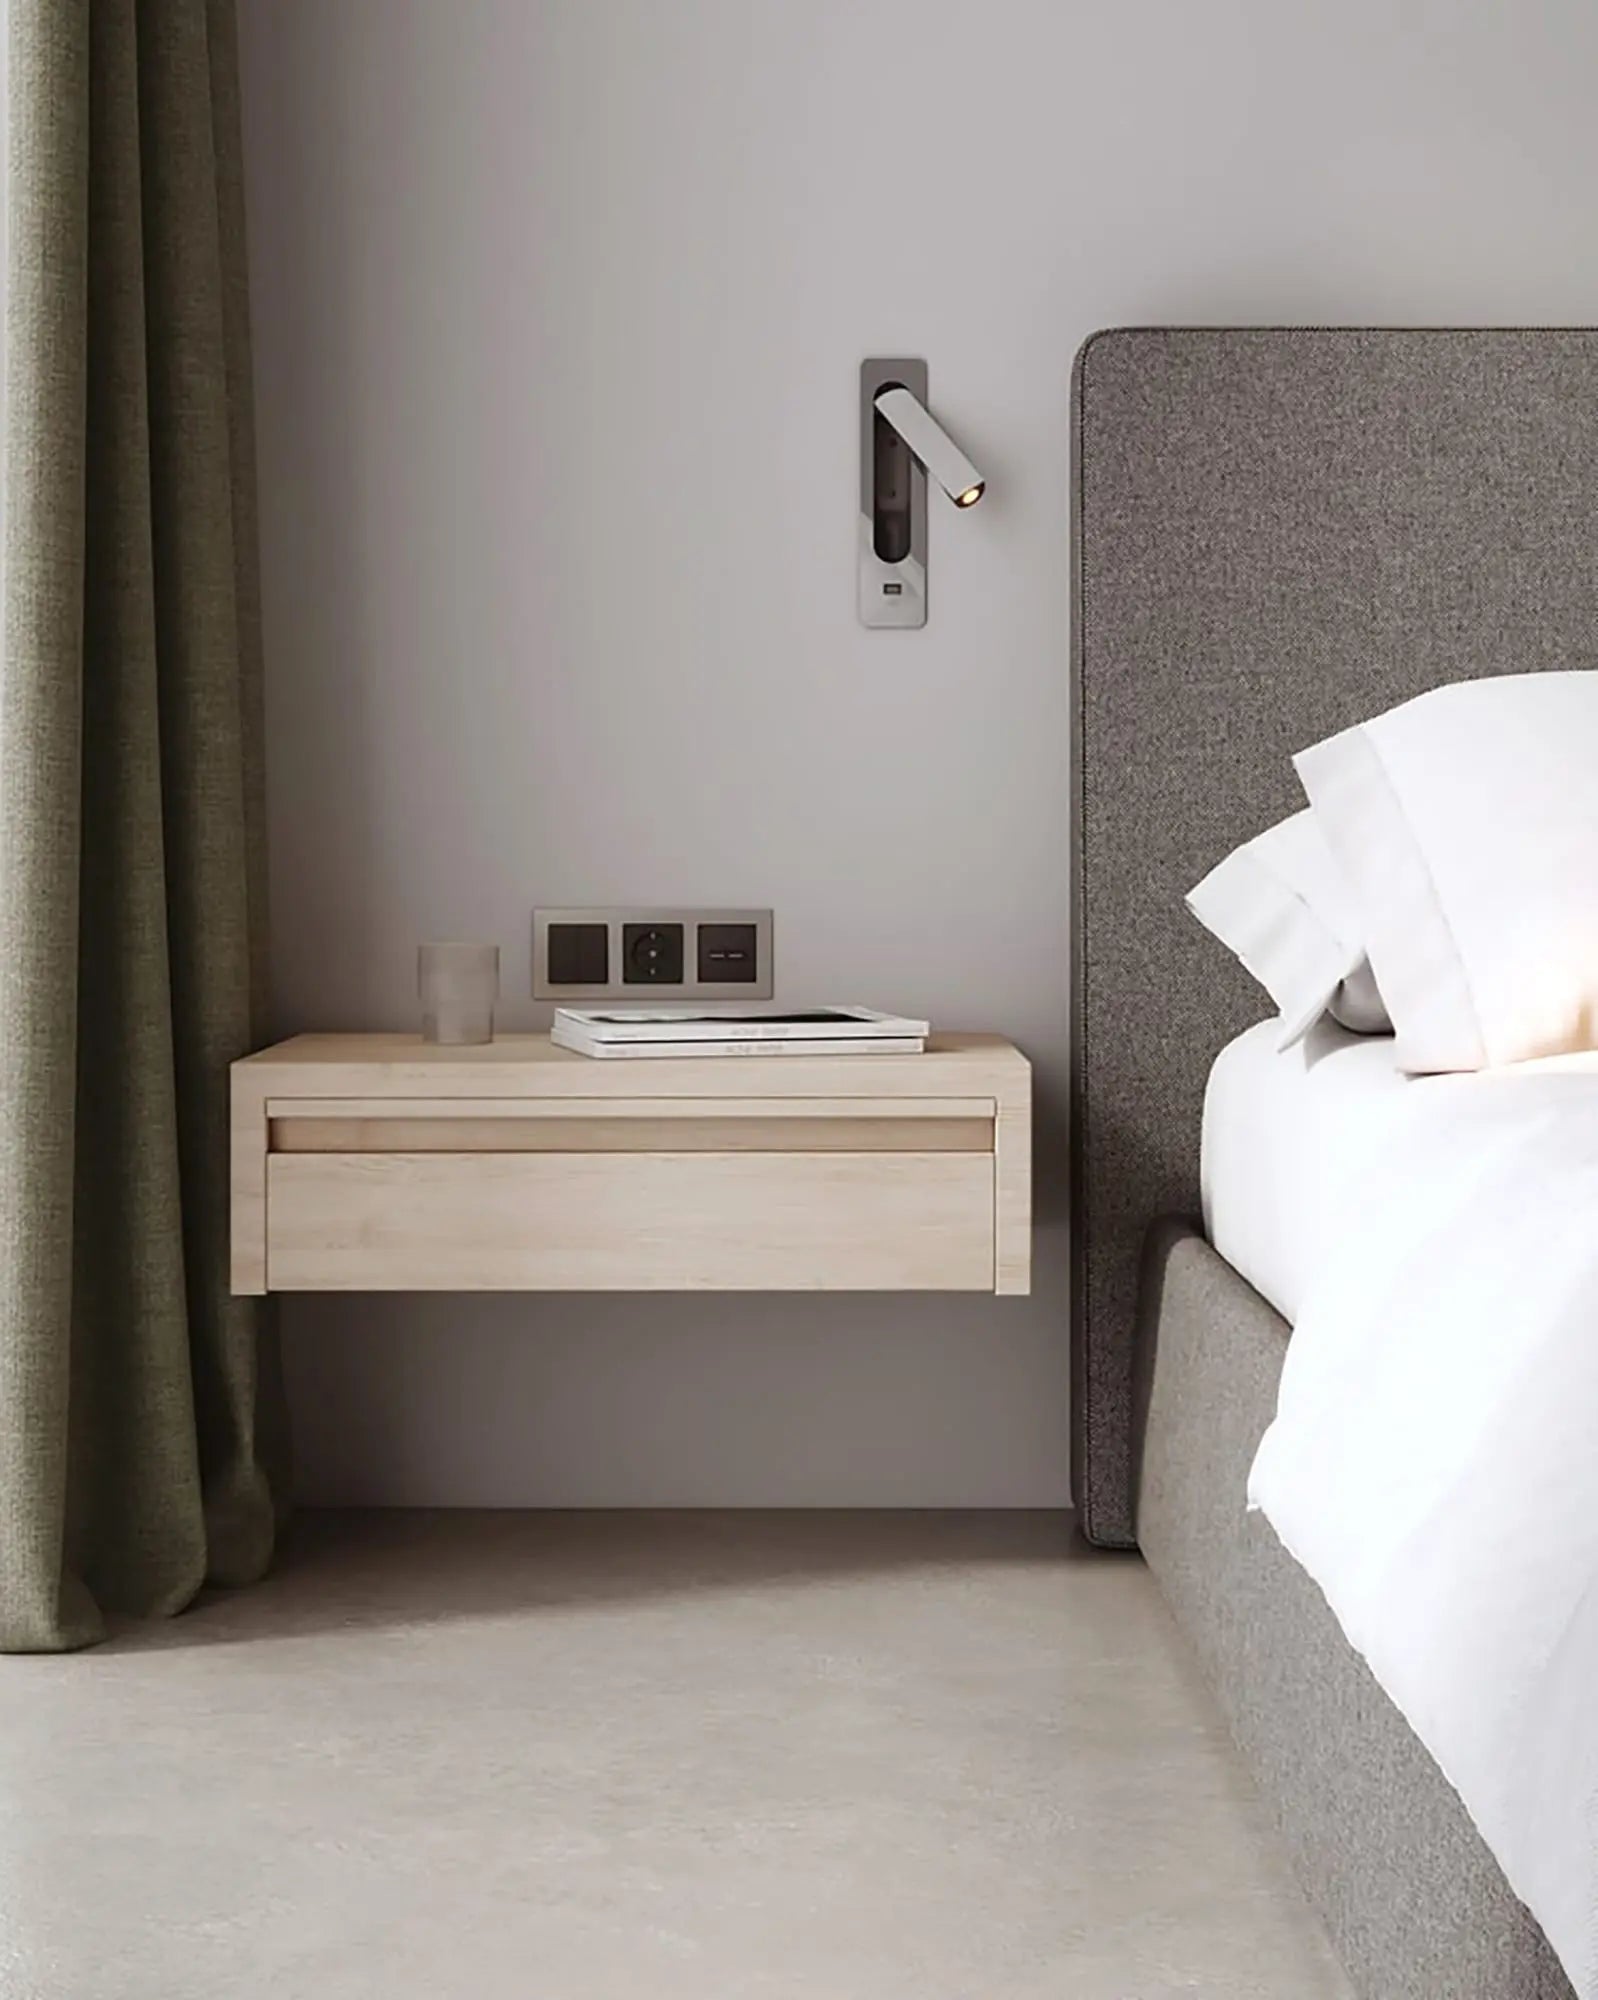 Keta Usb modern foldable wall spotlight bed side